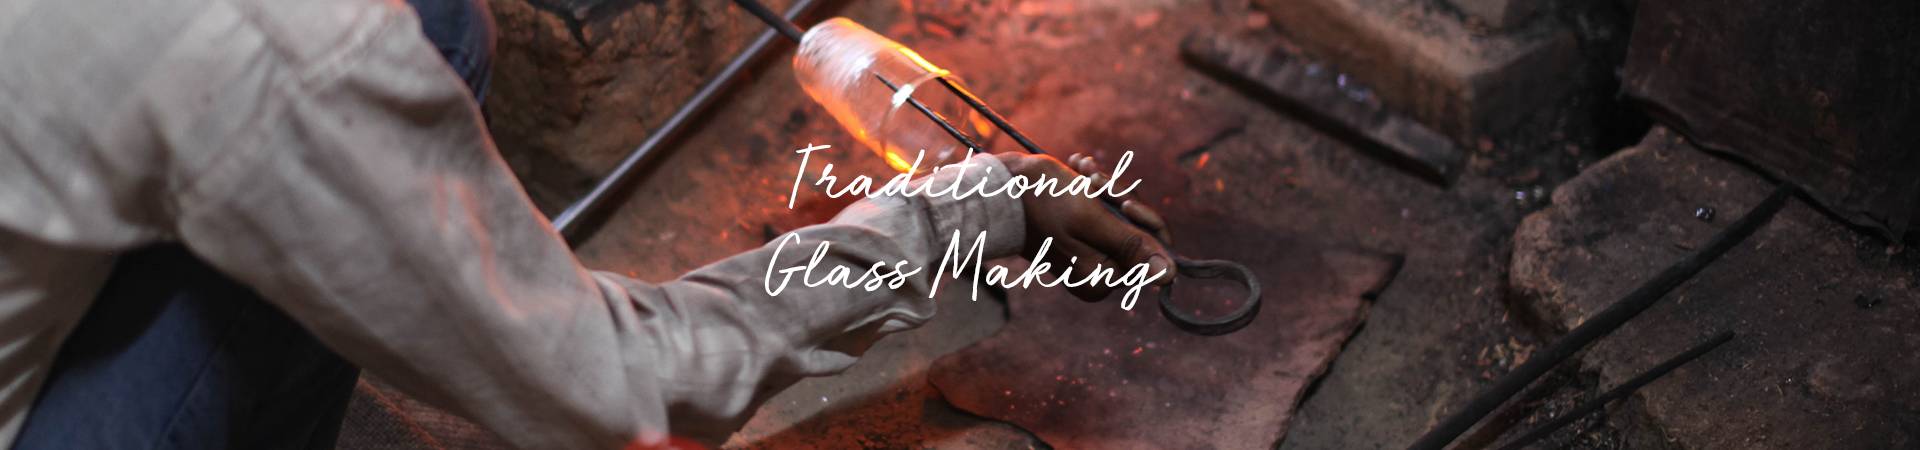 Nkuku_Traditional-Glass-Making_Header_Desktop.jpg